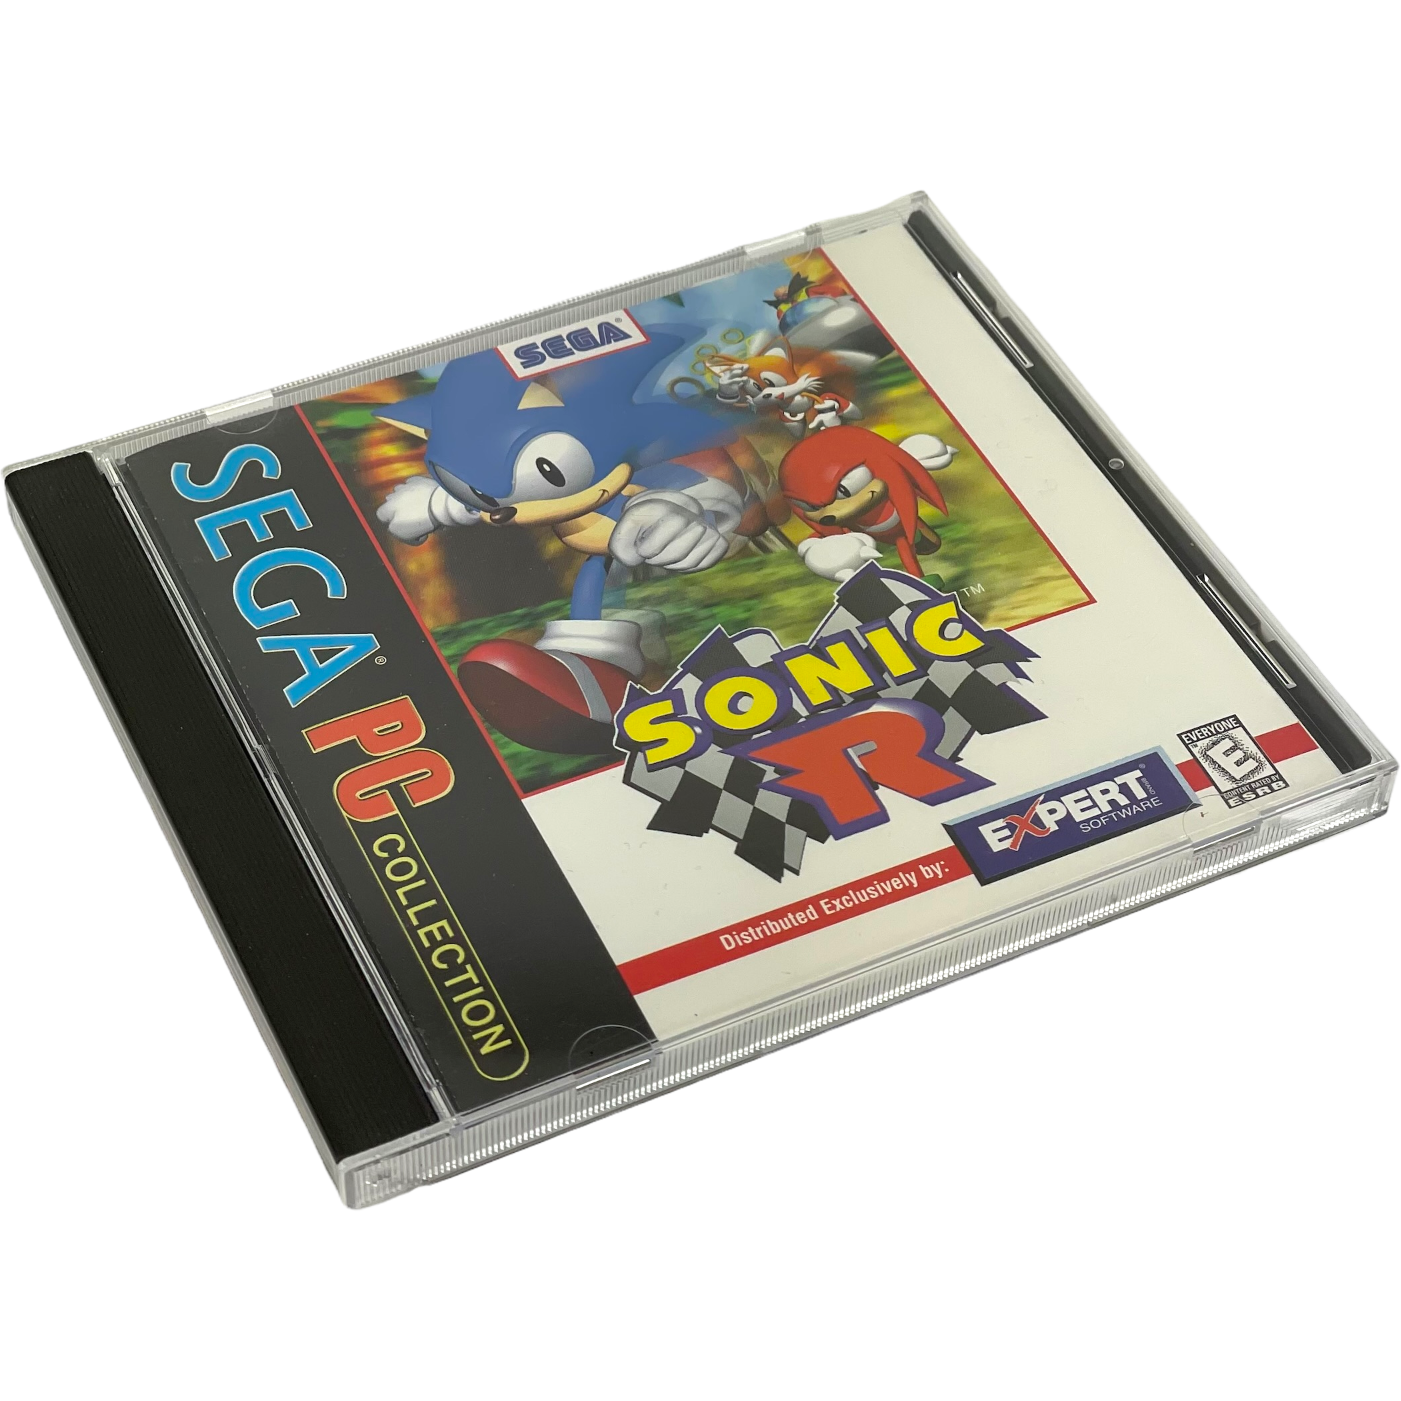 PC-Sonic R